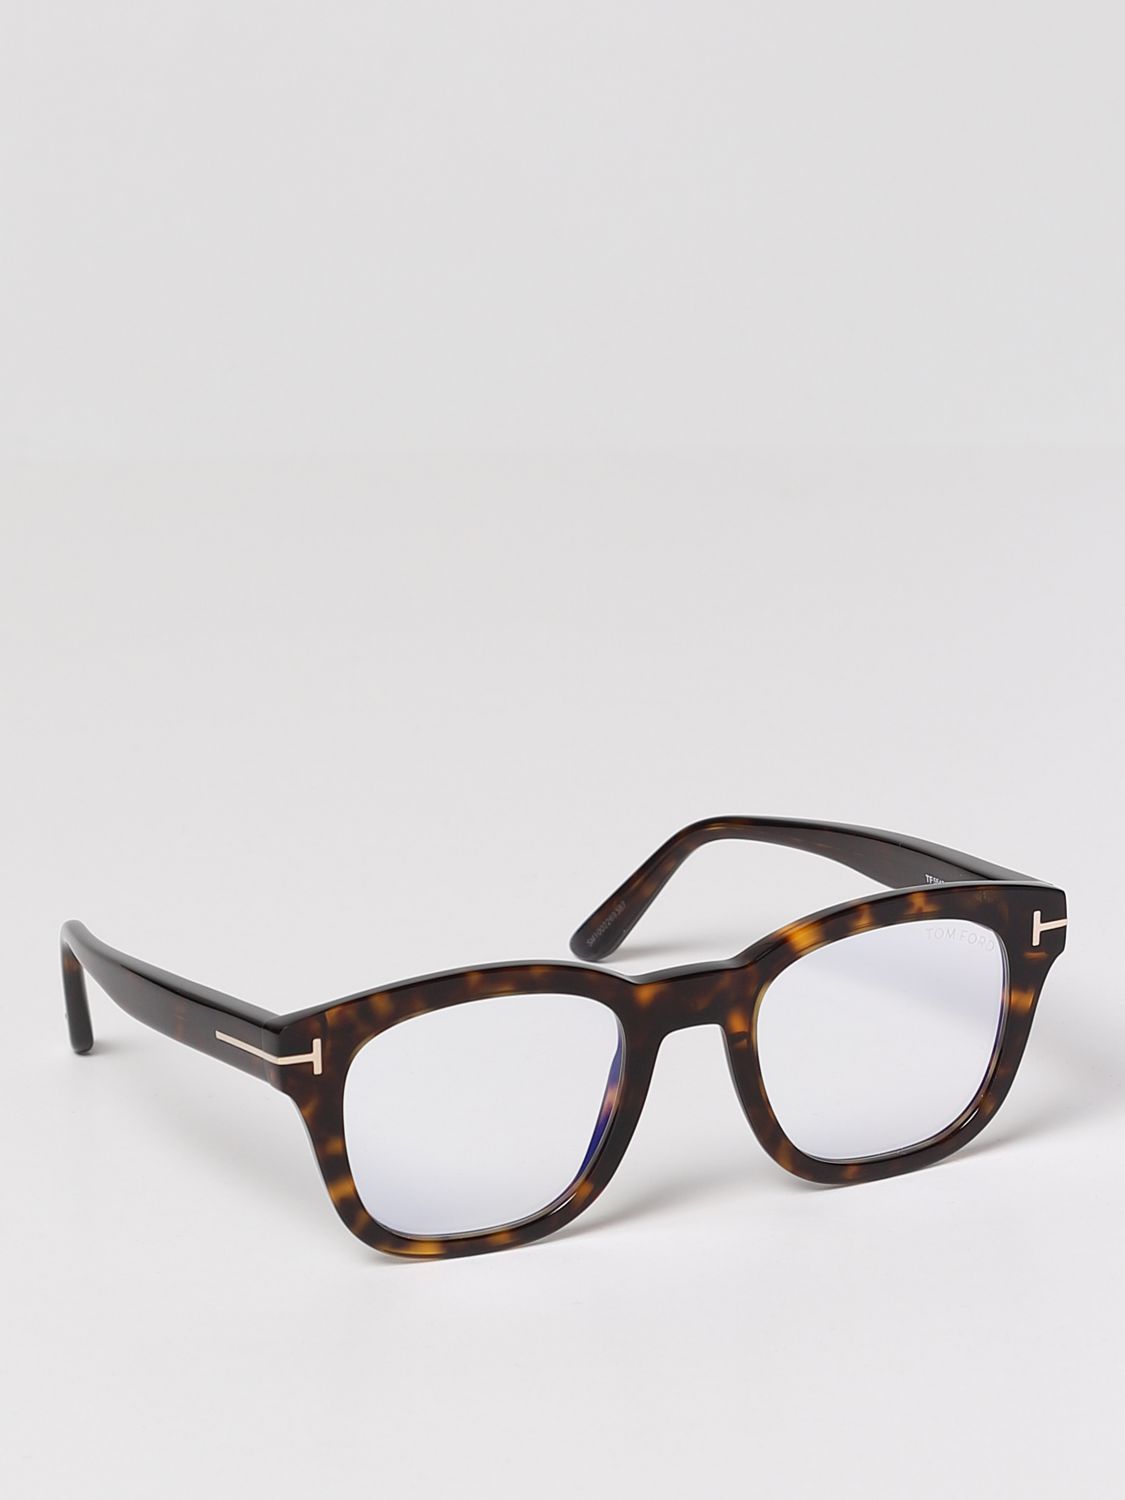 Glasses Tom Ford: TF 5542 Tom Ford eyeglasses brown 1